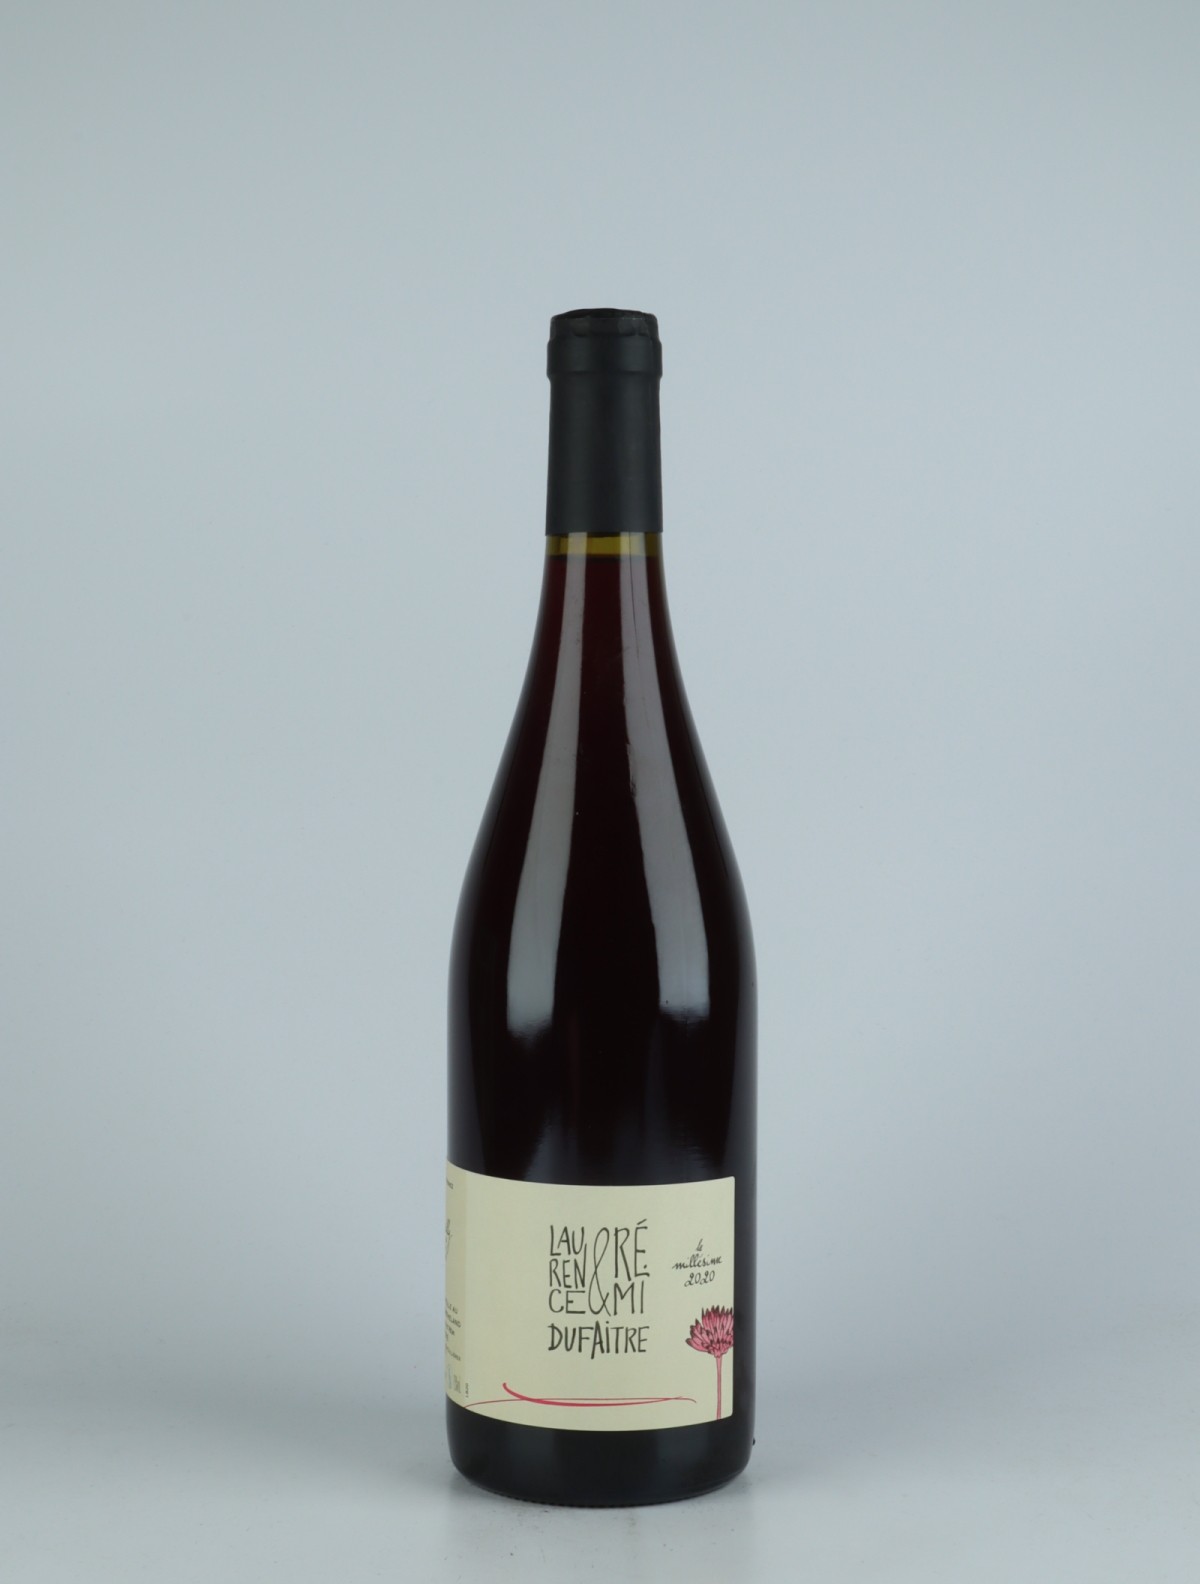 En flaske 2020 Brouilly Rødvin fra Laurence & Rémi Dufaitre, Beaujolais i Frankrig